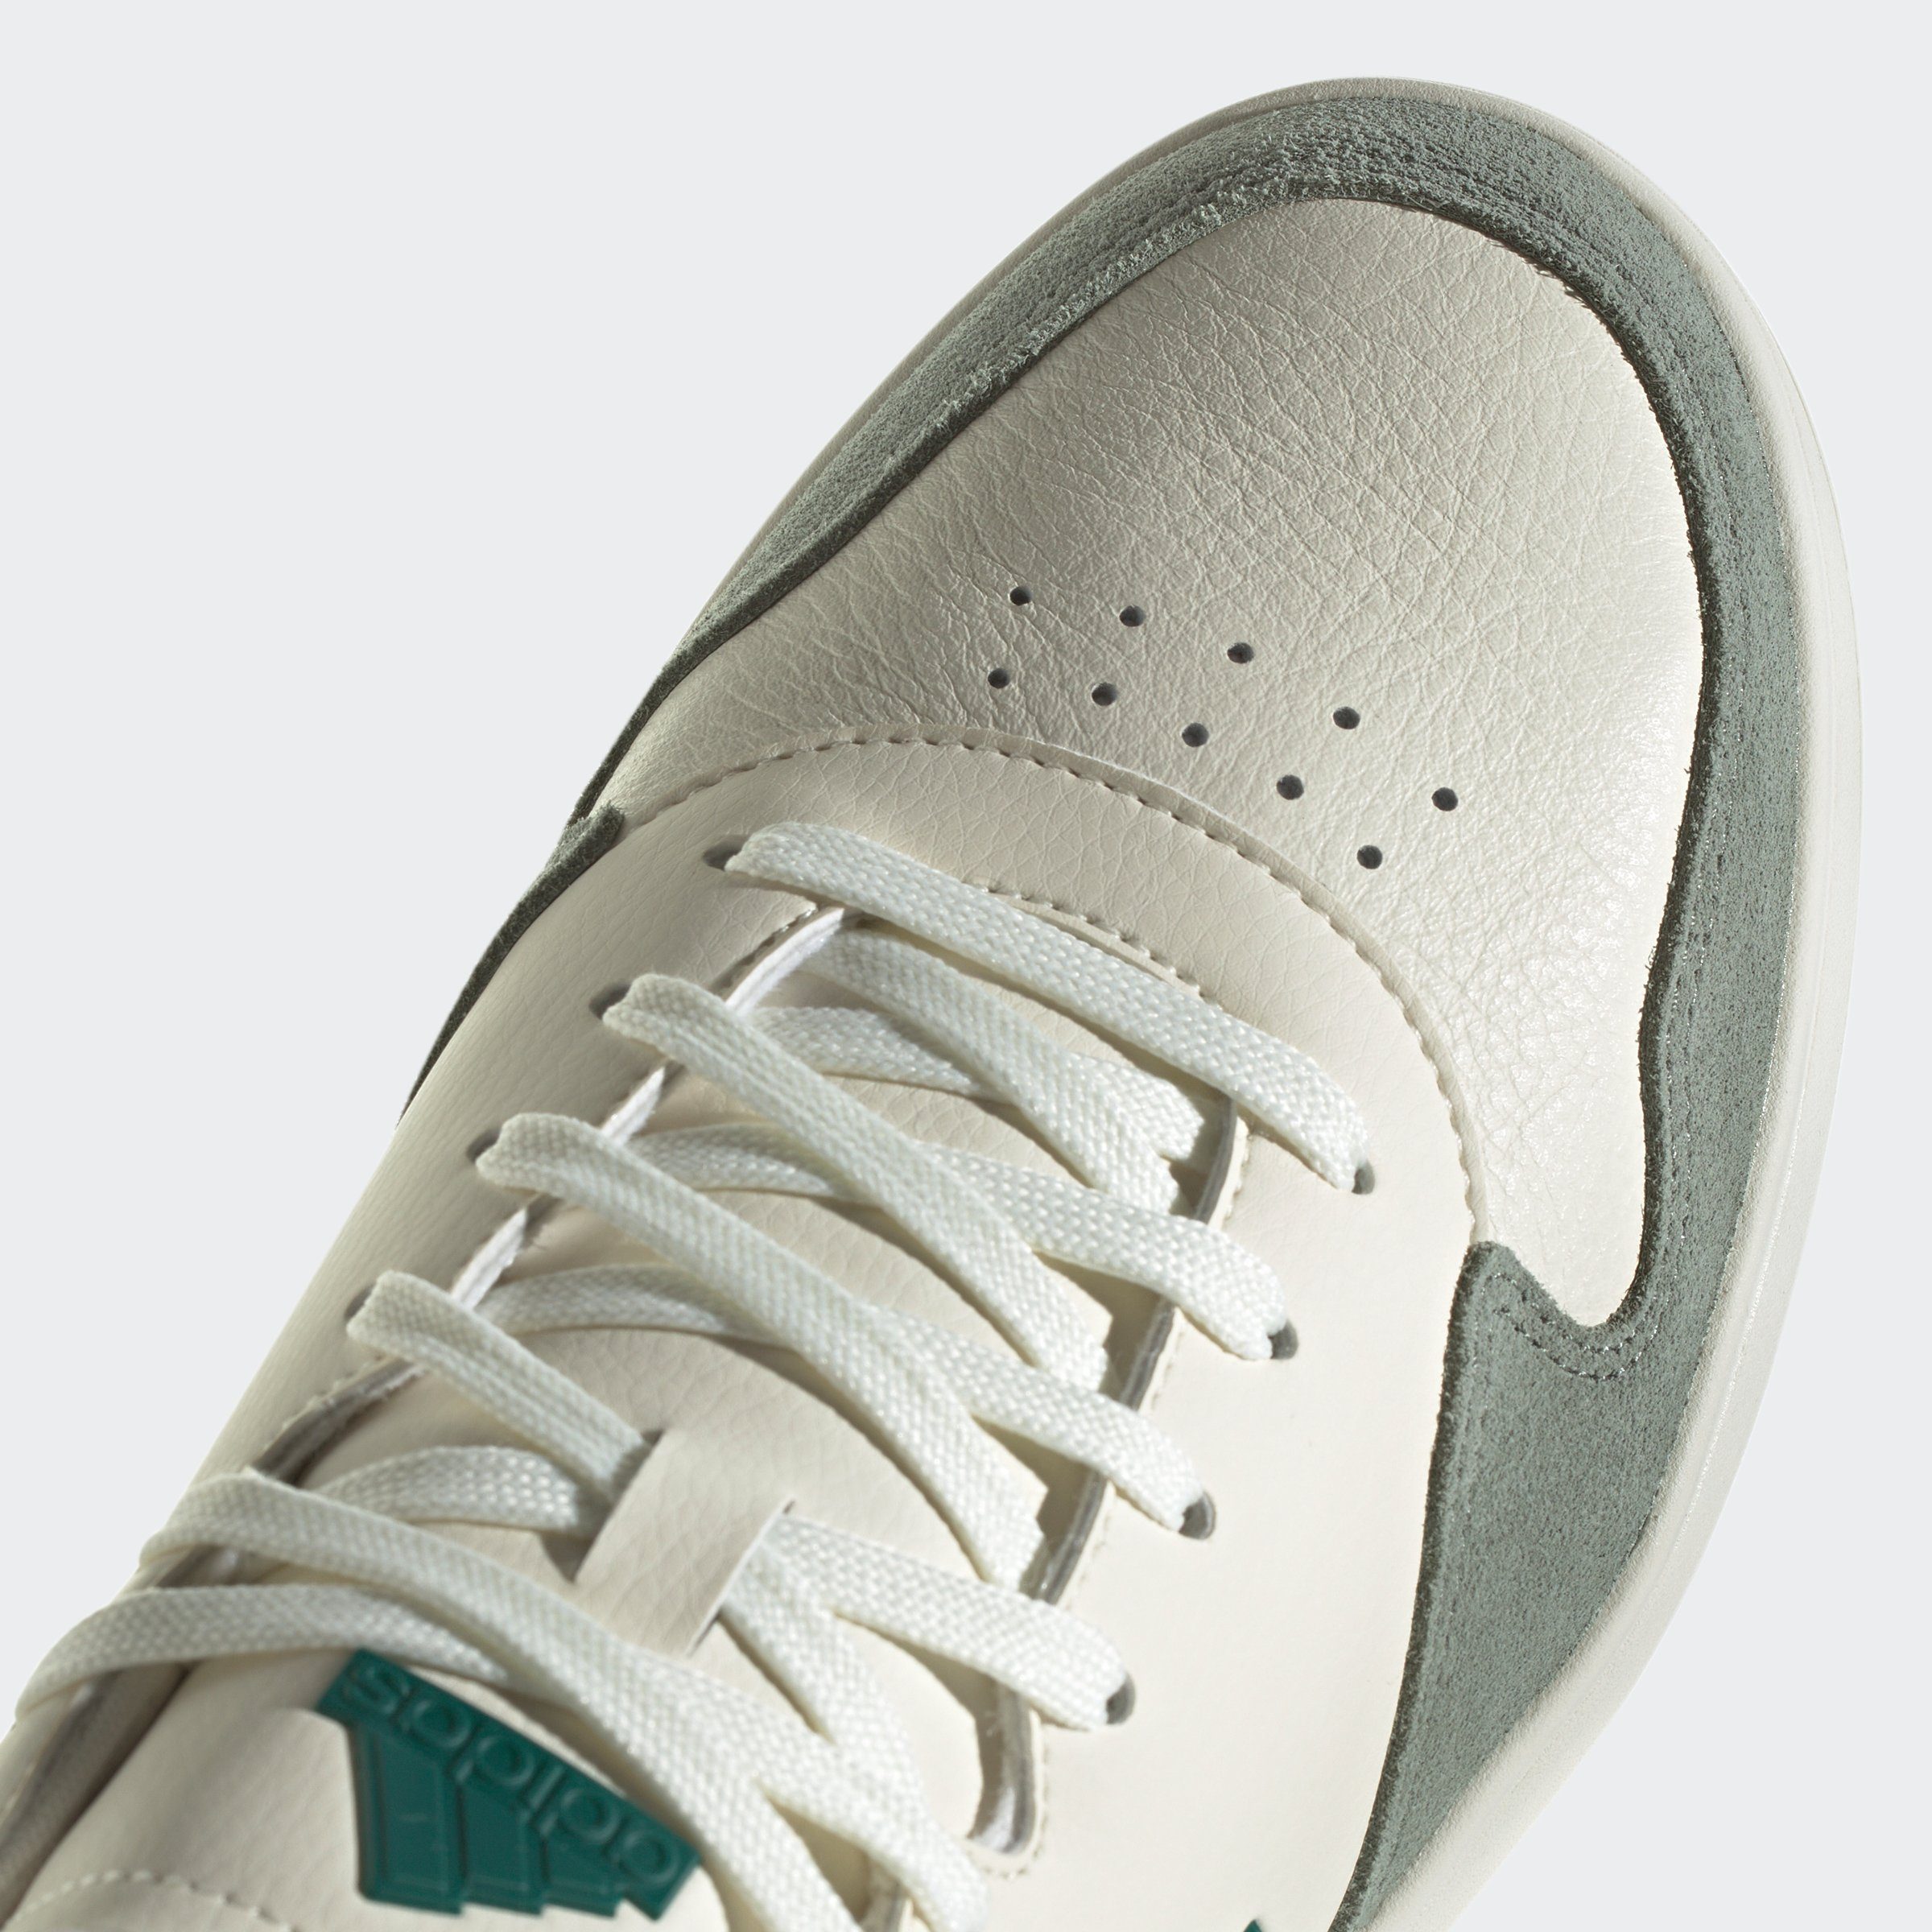 Collegiate Off Sportswear / Green White KATANA Silver adidas / Green Sneaker